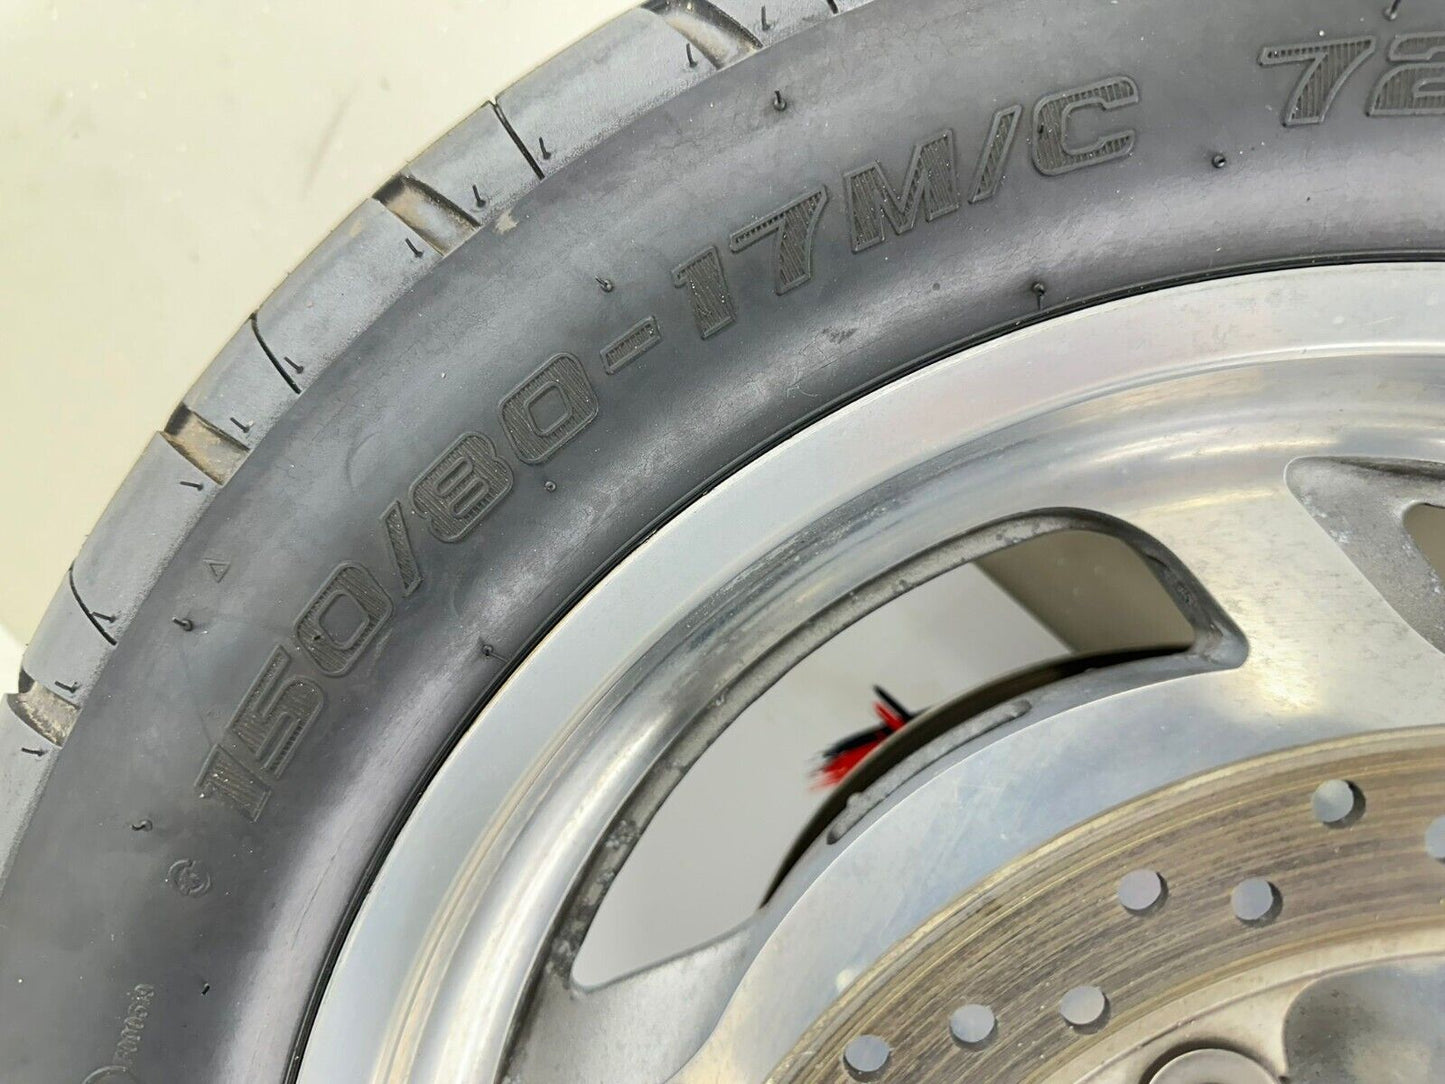 1998 HONDA VALKYRIE TOURING Front Wheel Rim Tire